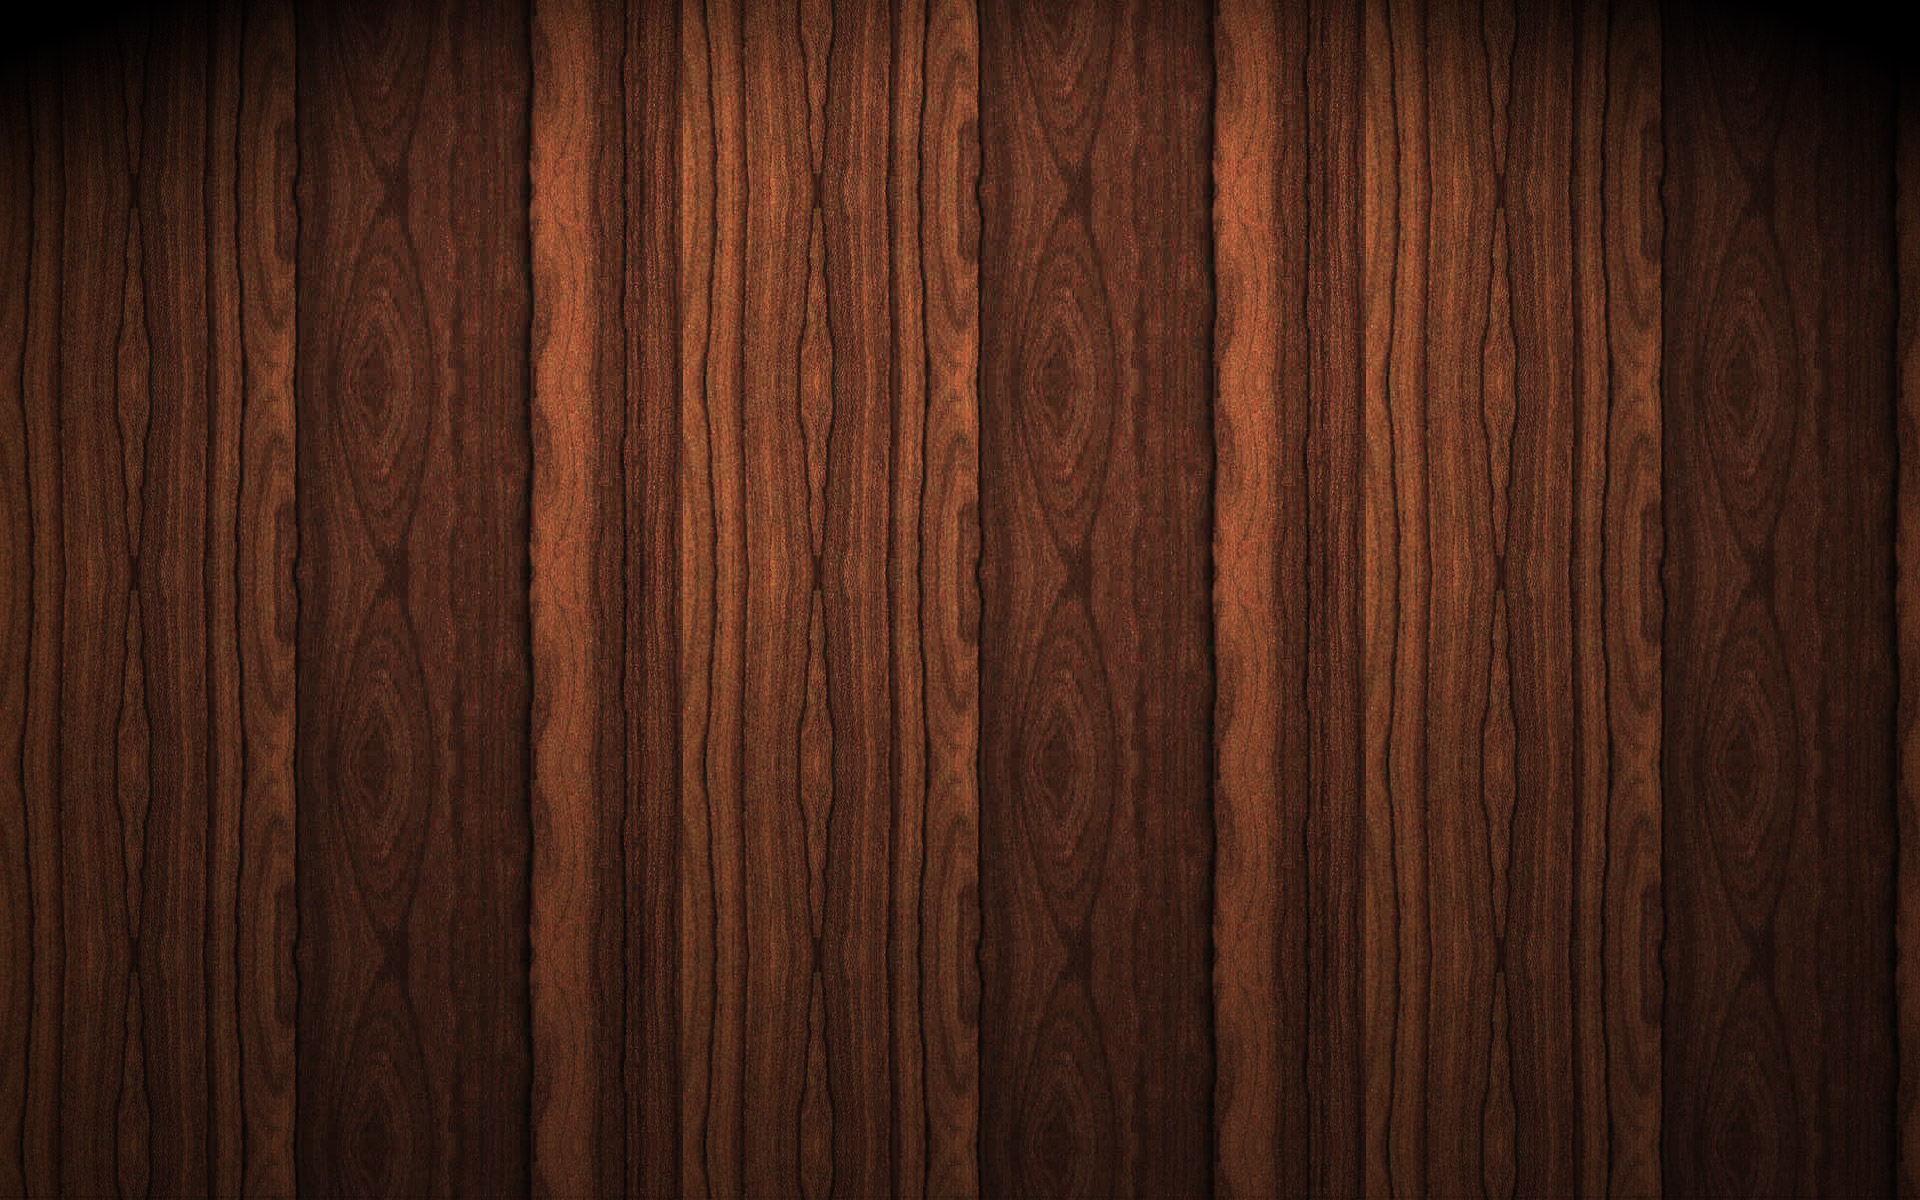 Textures wood texture wallpaper background